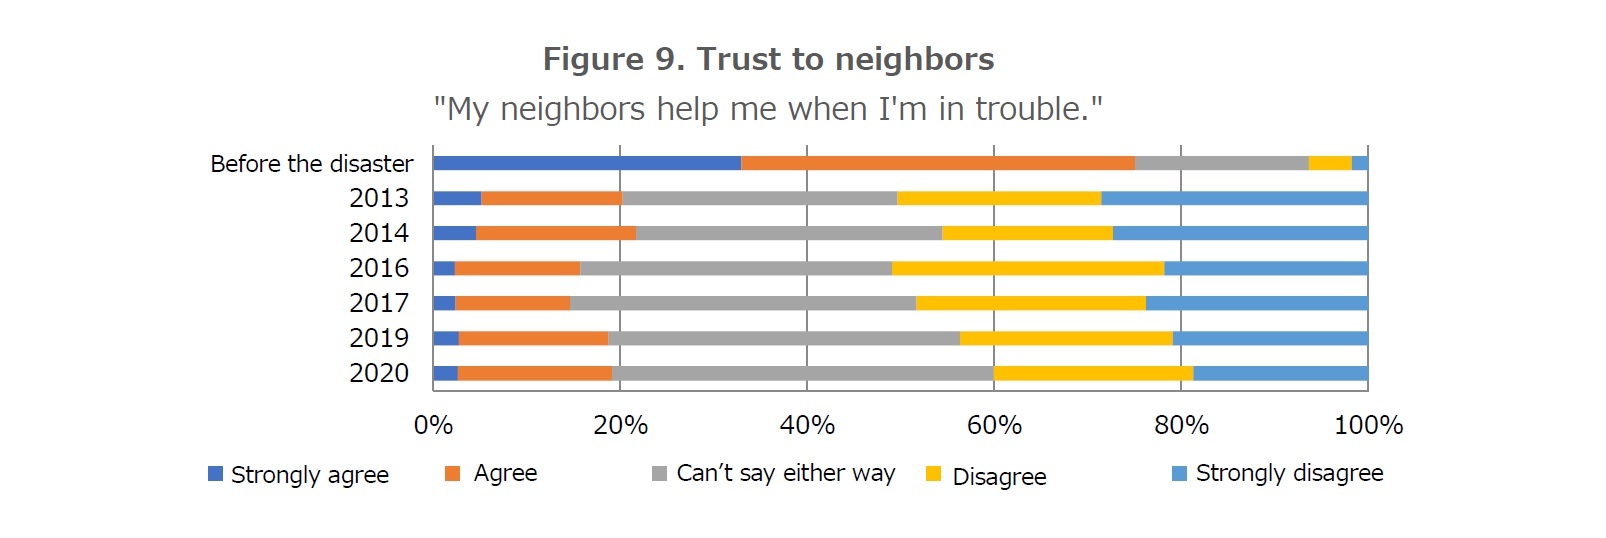 Figure 9. Trust to neighbors